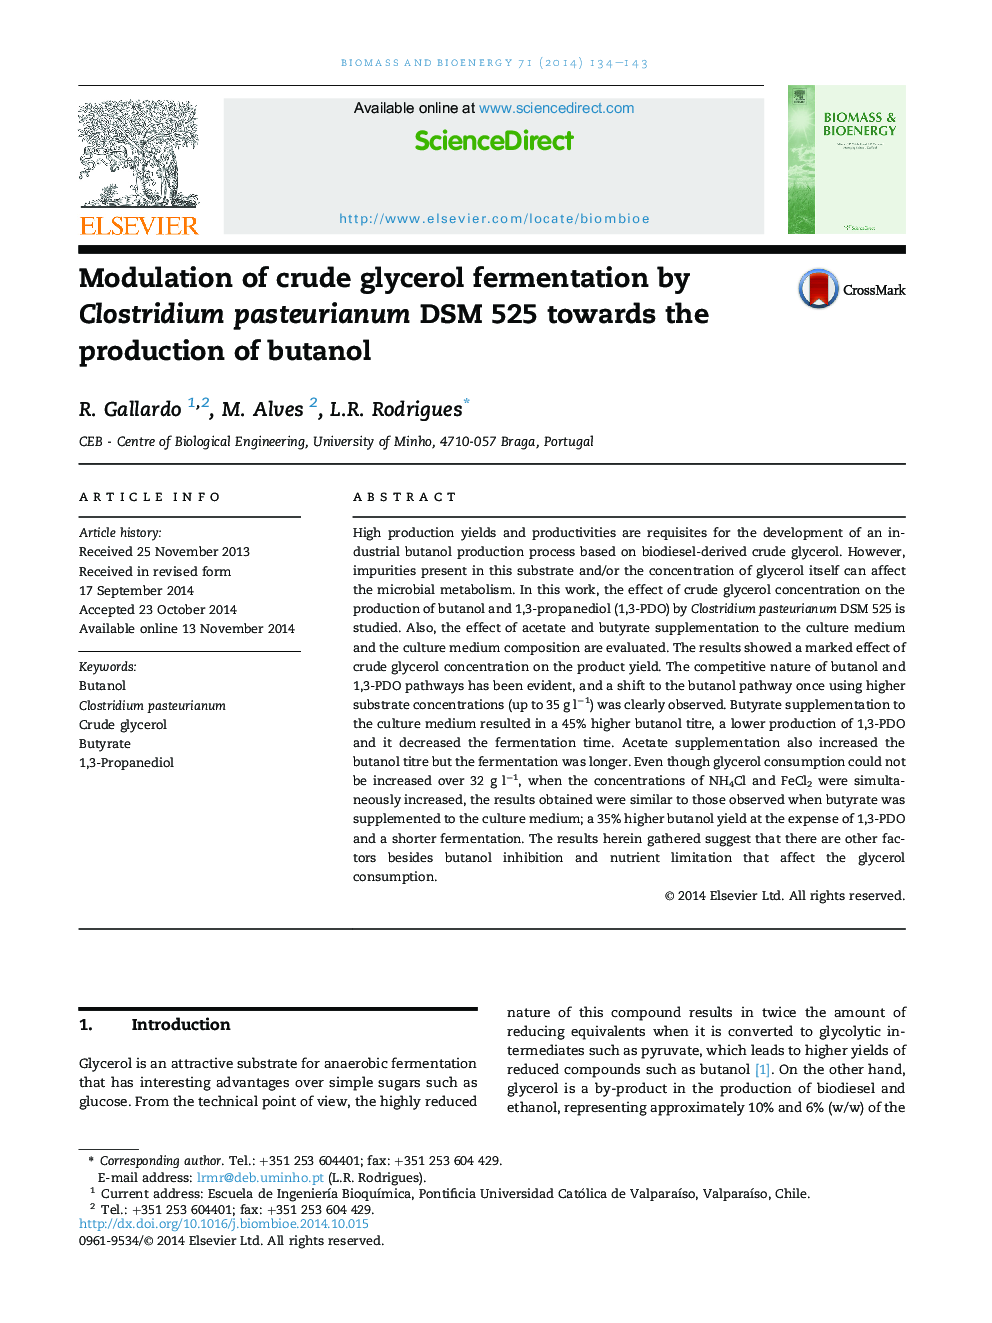 Modulation of crude glycerol fermentation by Clostridium pasteurianum DSM 525 towards the production of butanol